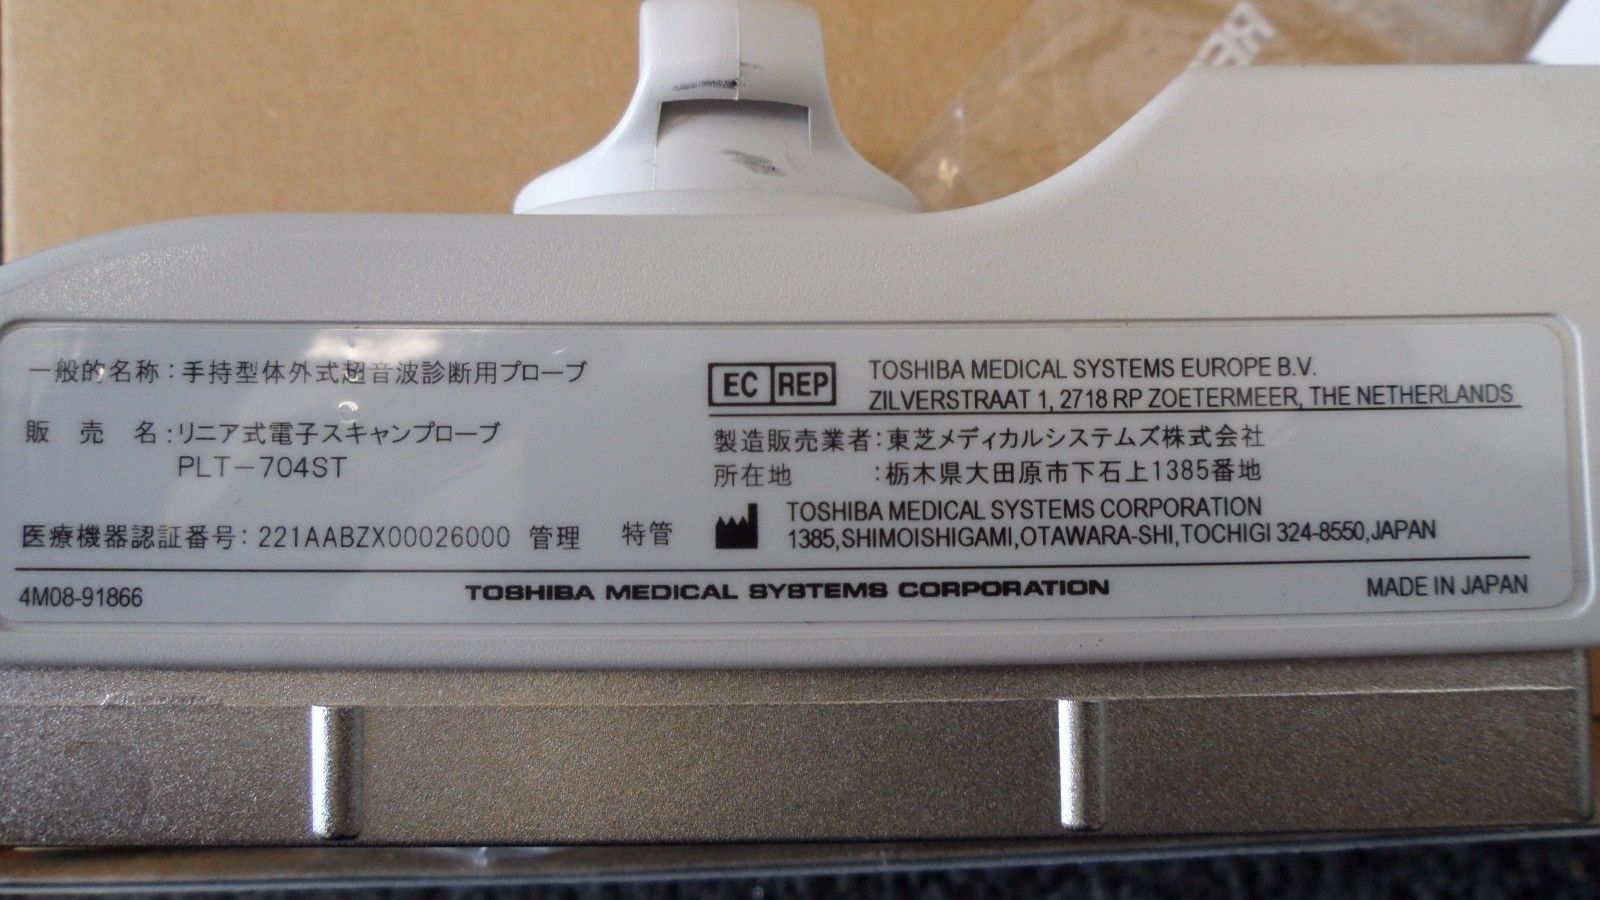 Toshiba Viamo PLT-704ST 7.5 MHz Linear ARRAY Transducer Probe DIAGNOSTIC ULTRASOUND MACHINES FOR SALE